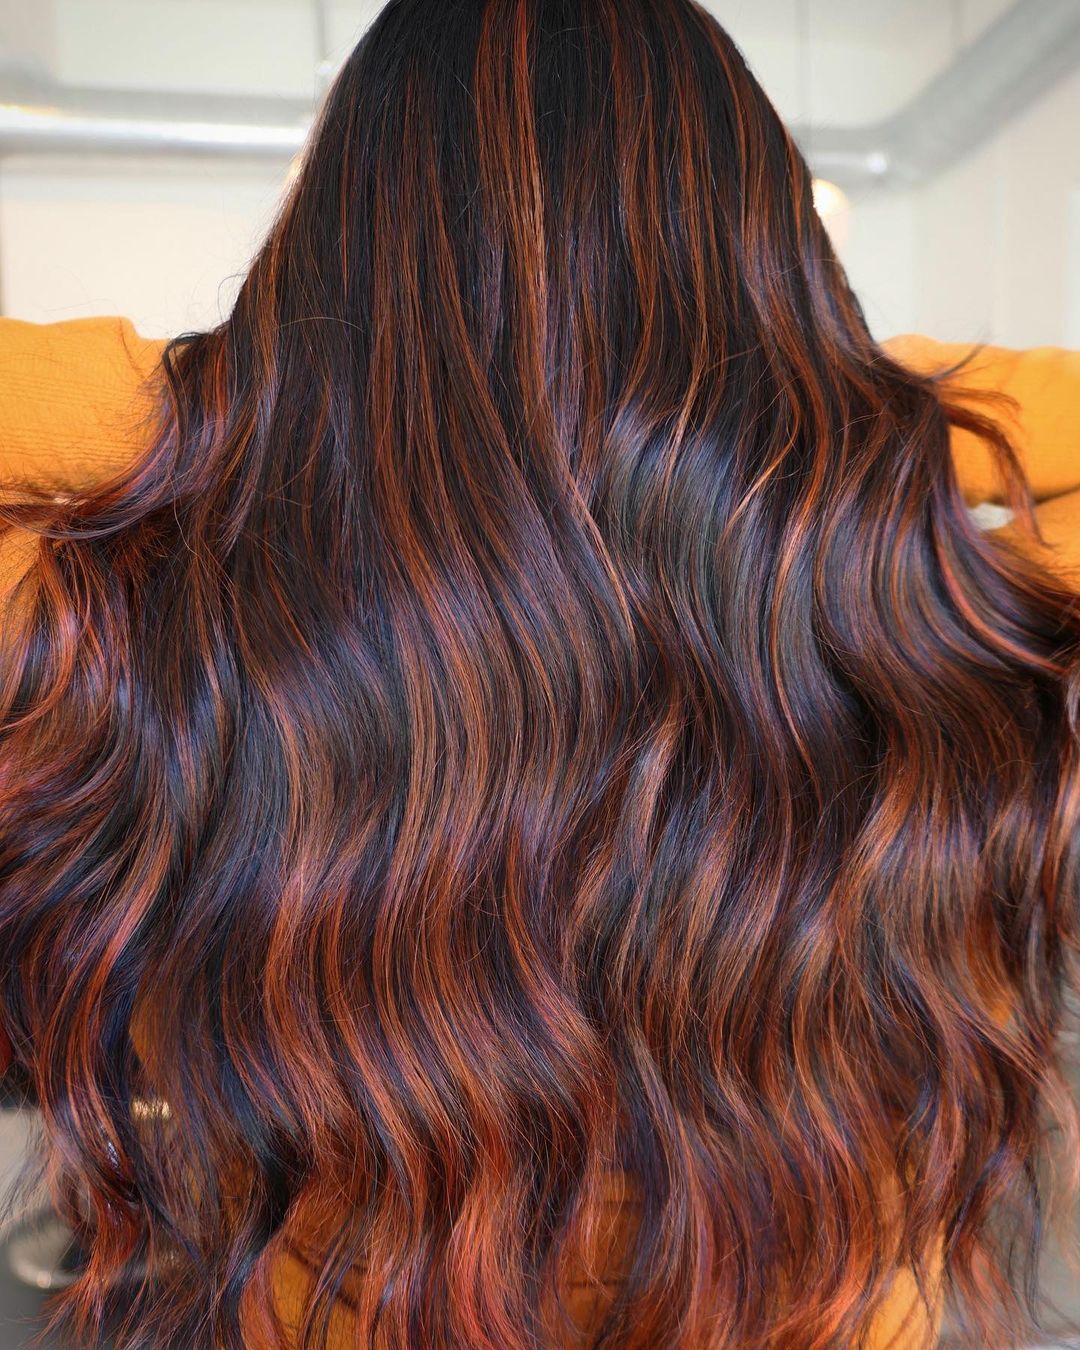 pumpkin spice highlights on long brown hair